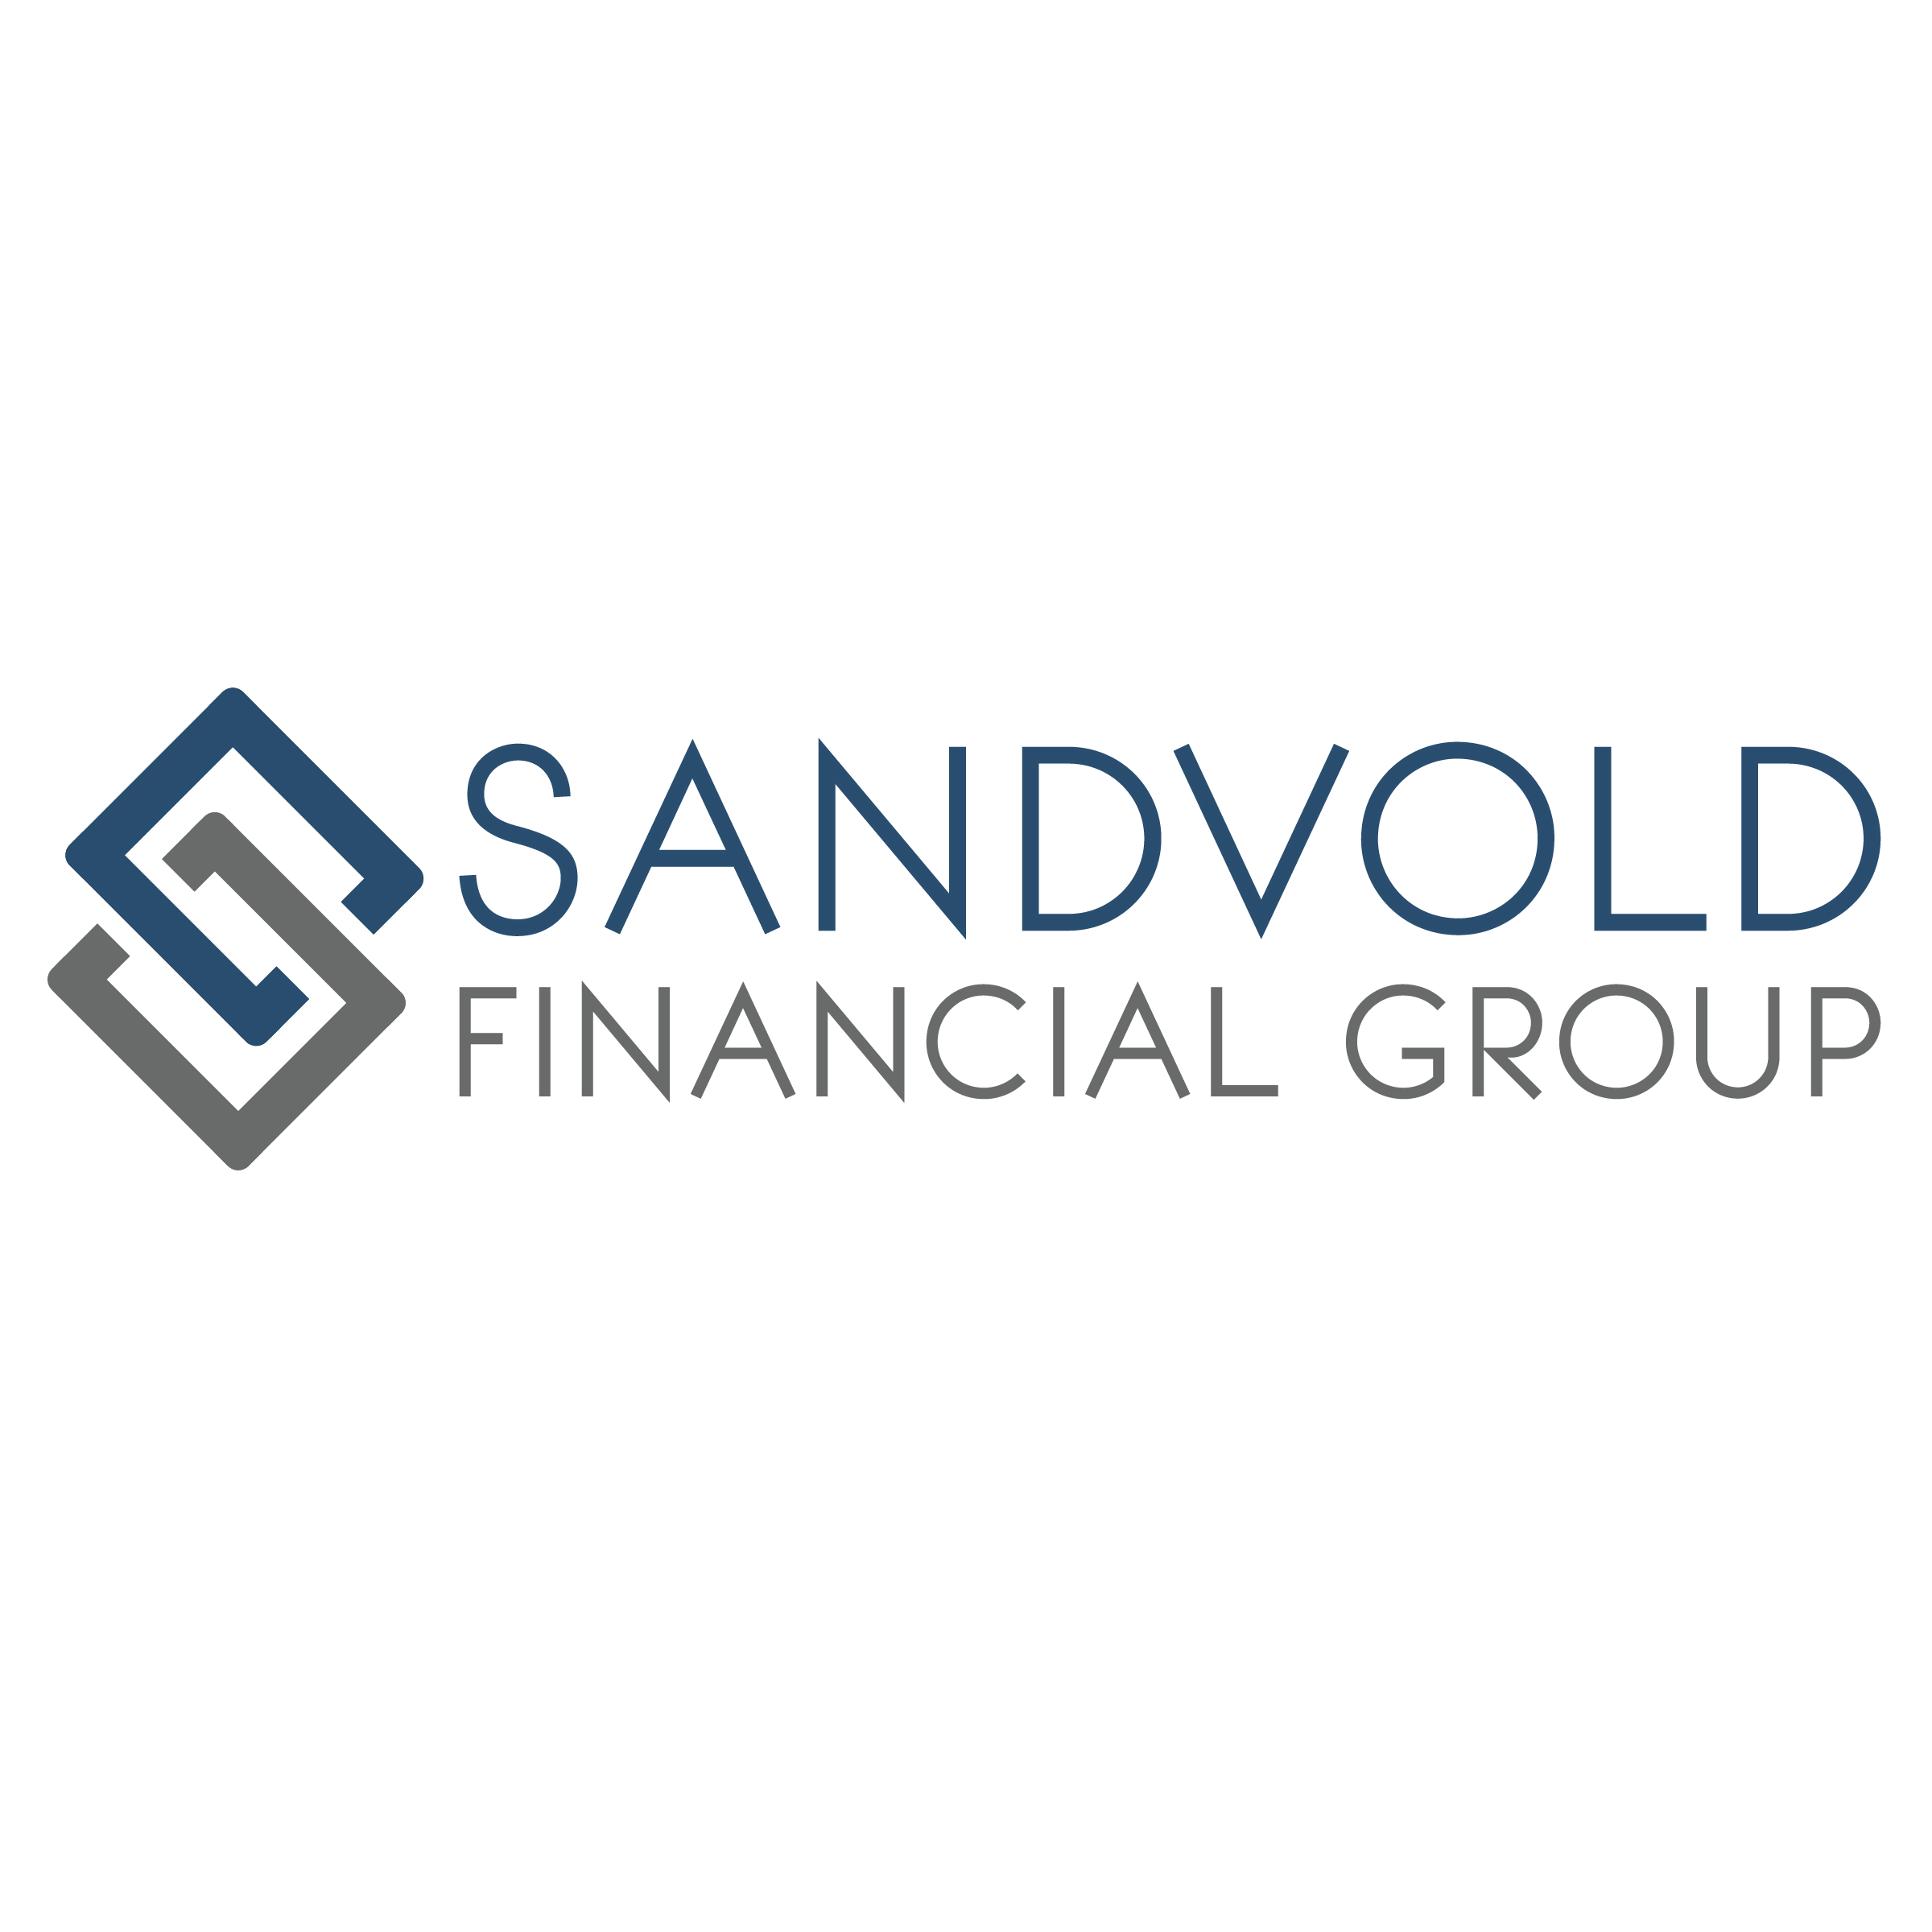 Sandvold Financial Group